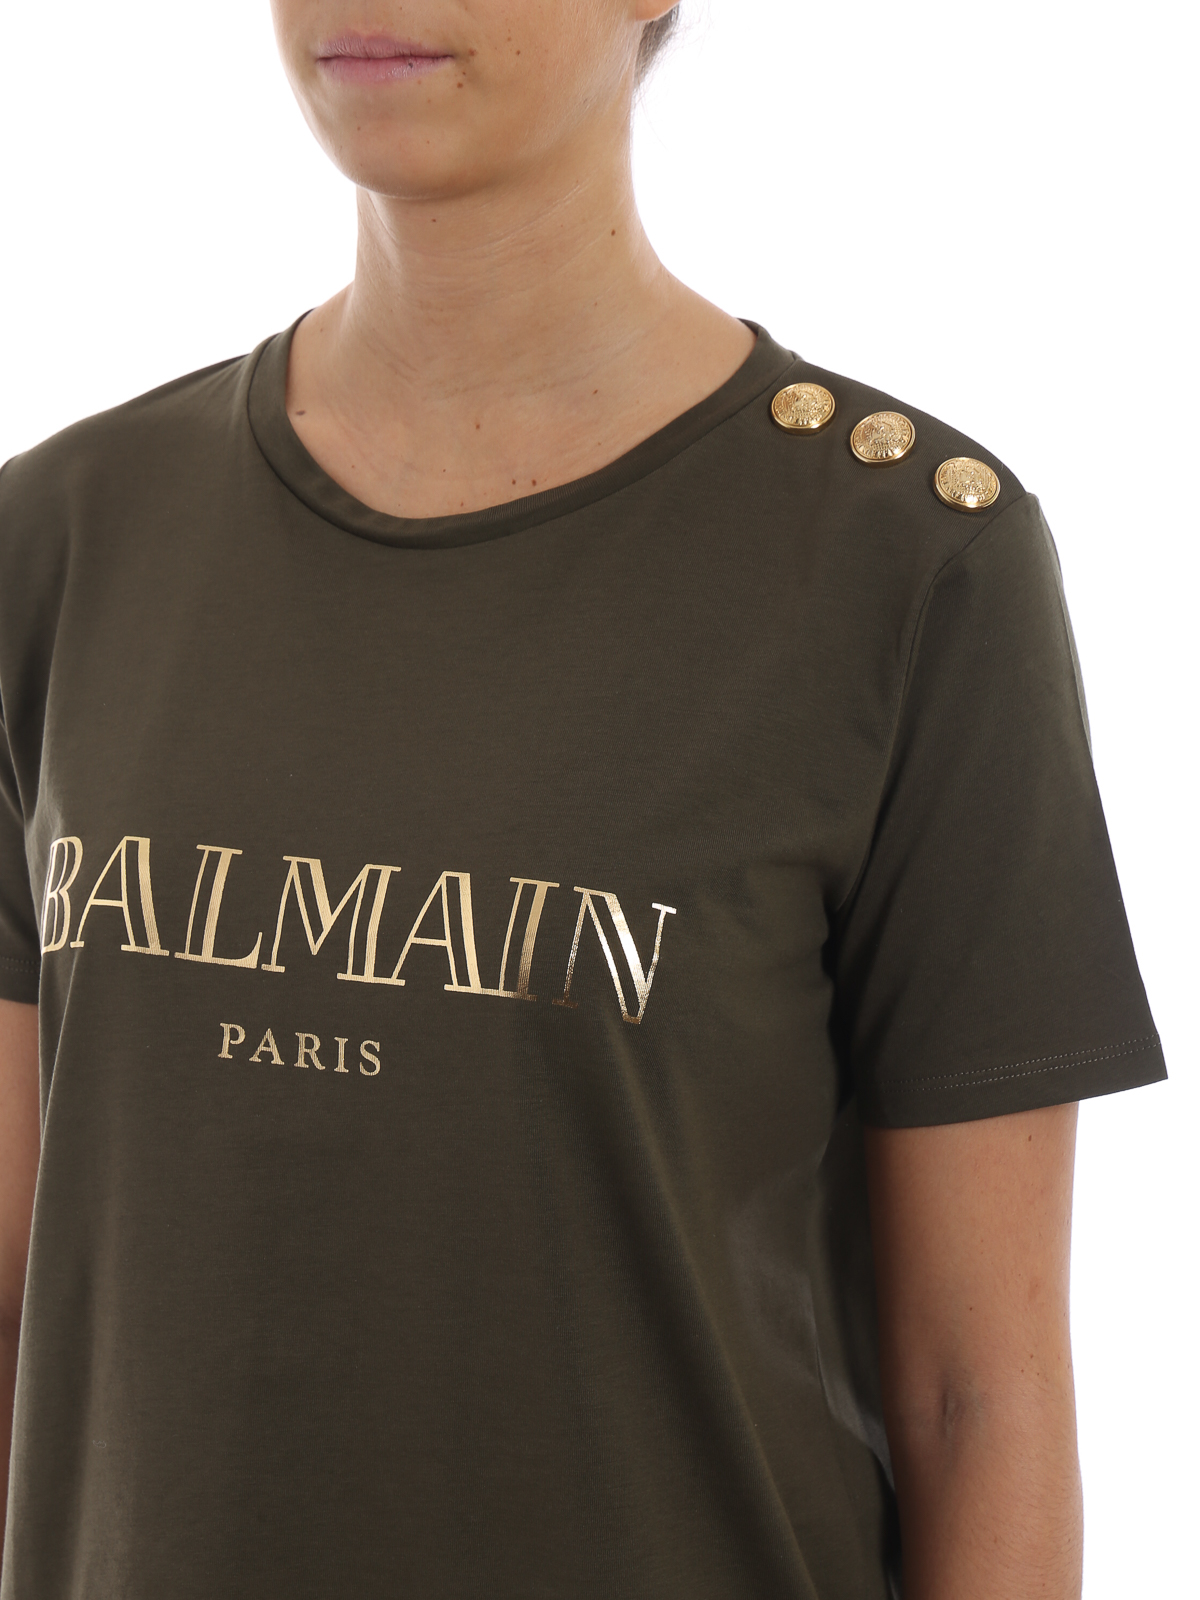 Balmain Army T Shirt Store, 53% OFF ...